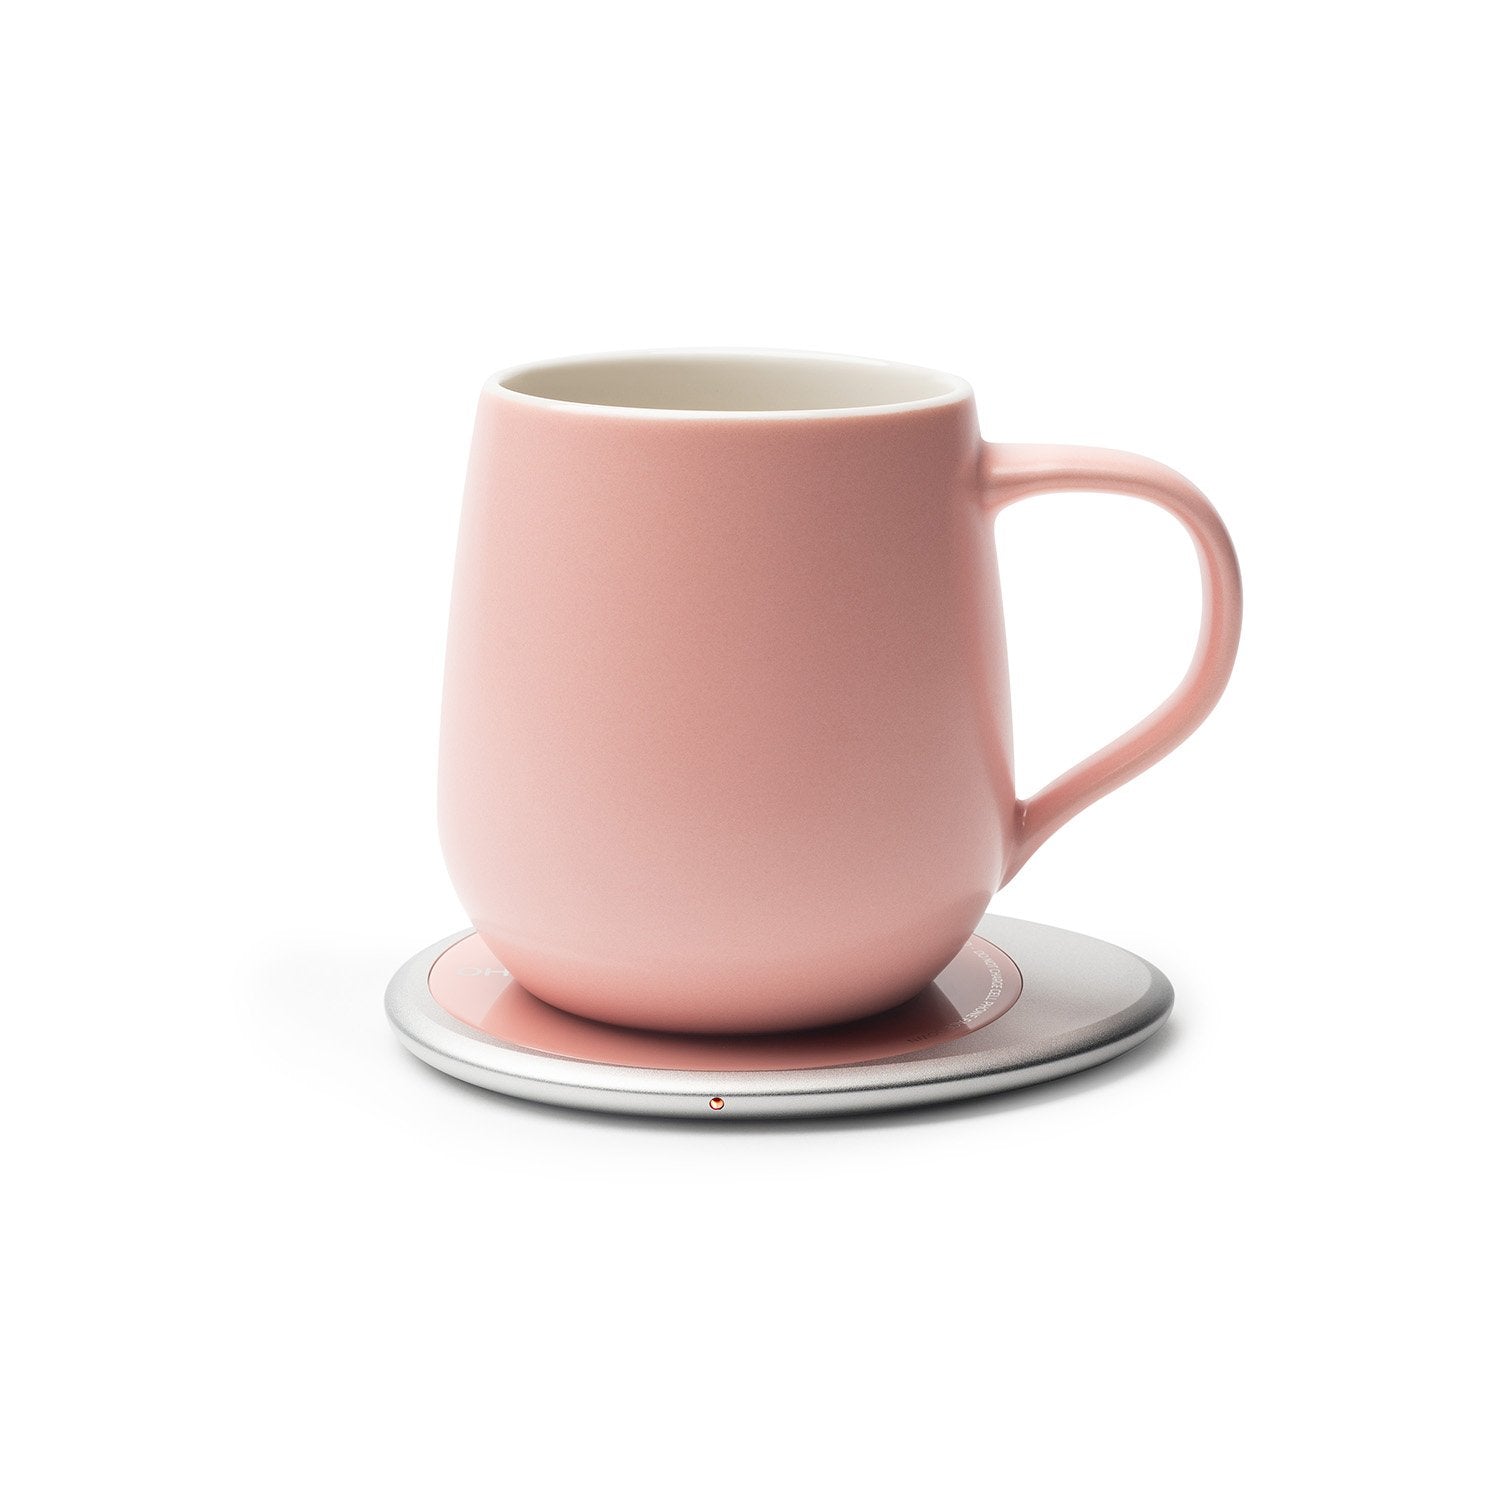 Pink mug on heating pad